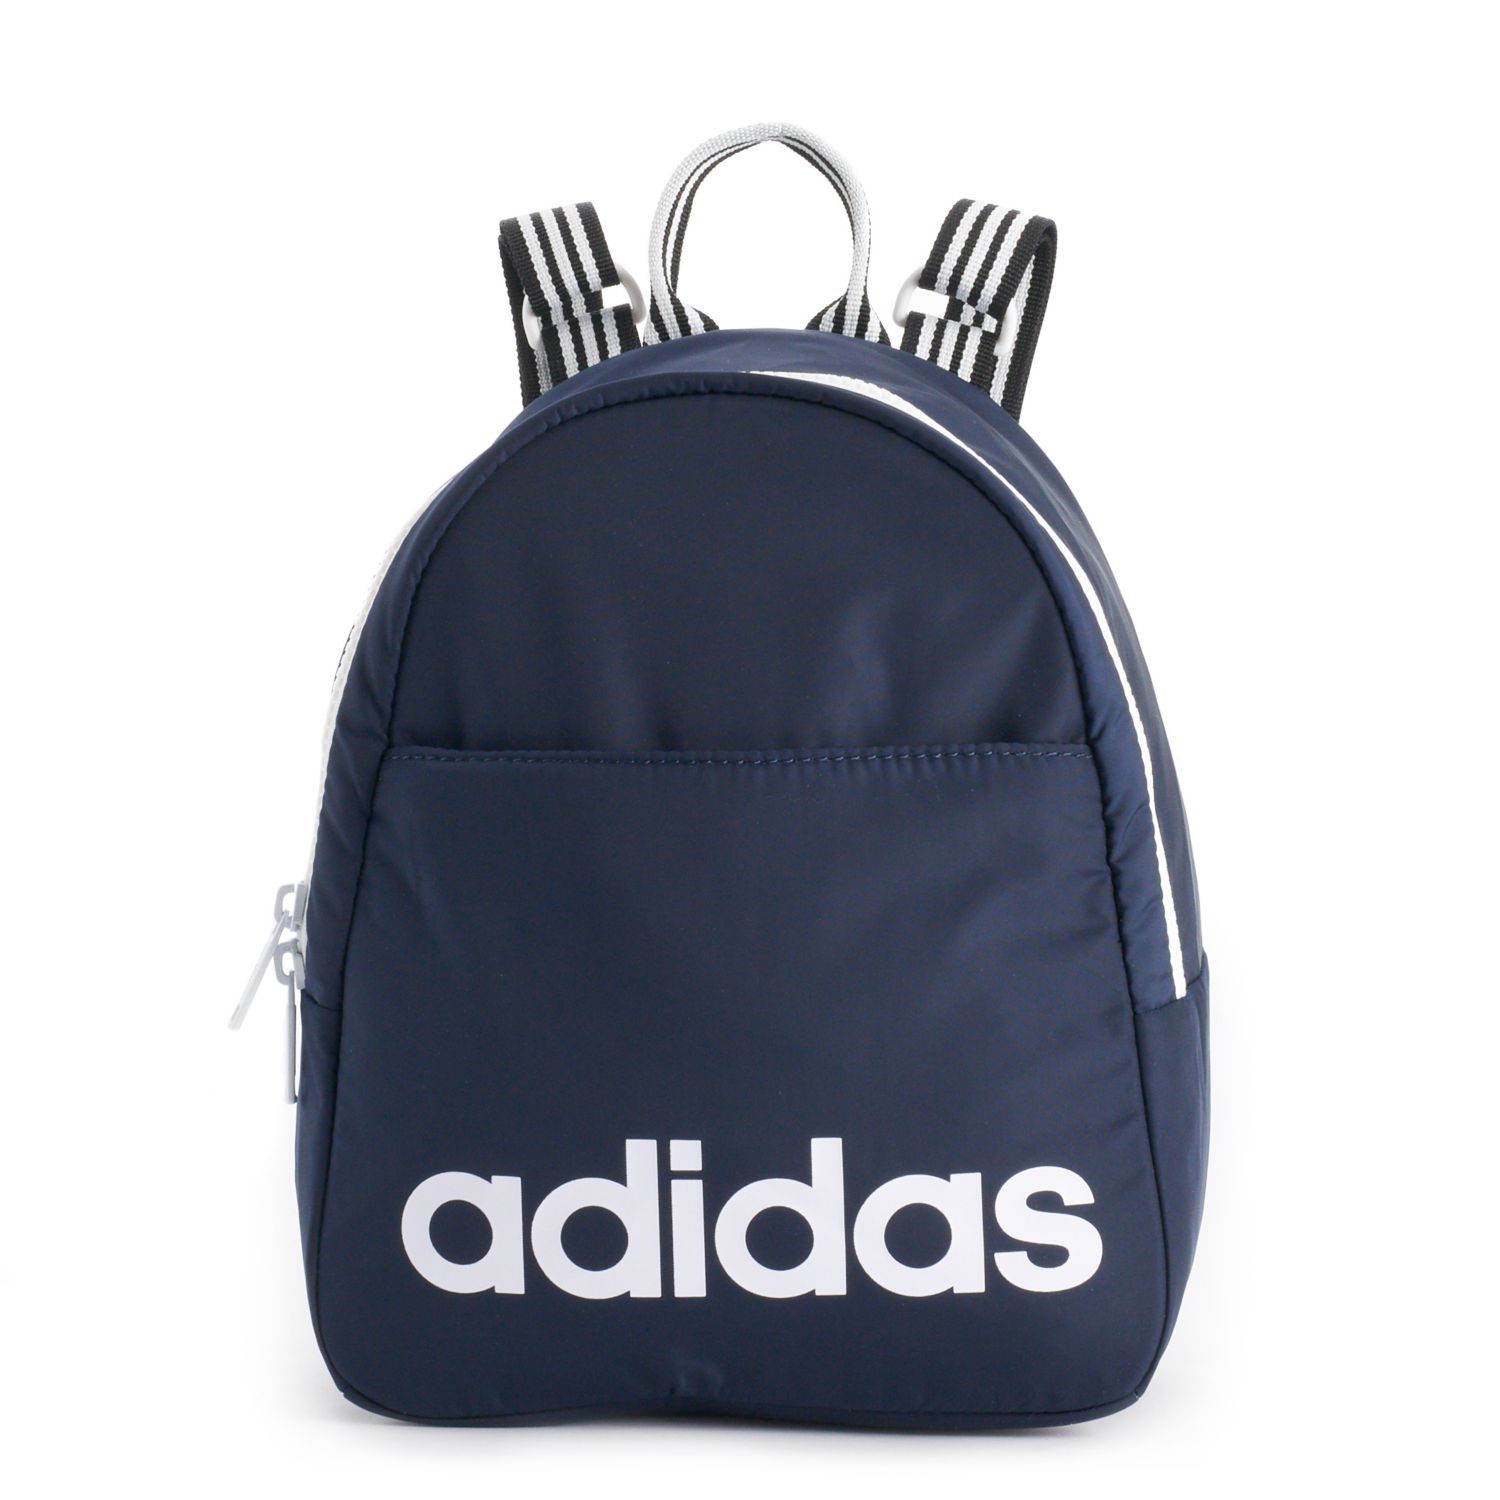 adidas mini backpack price